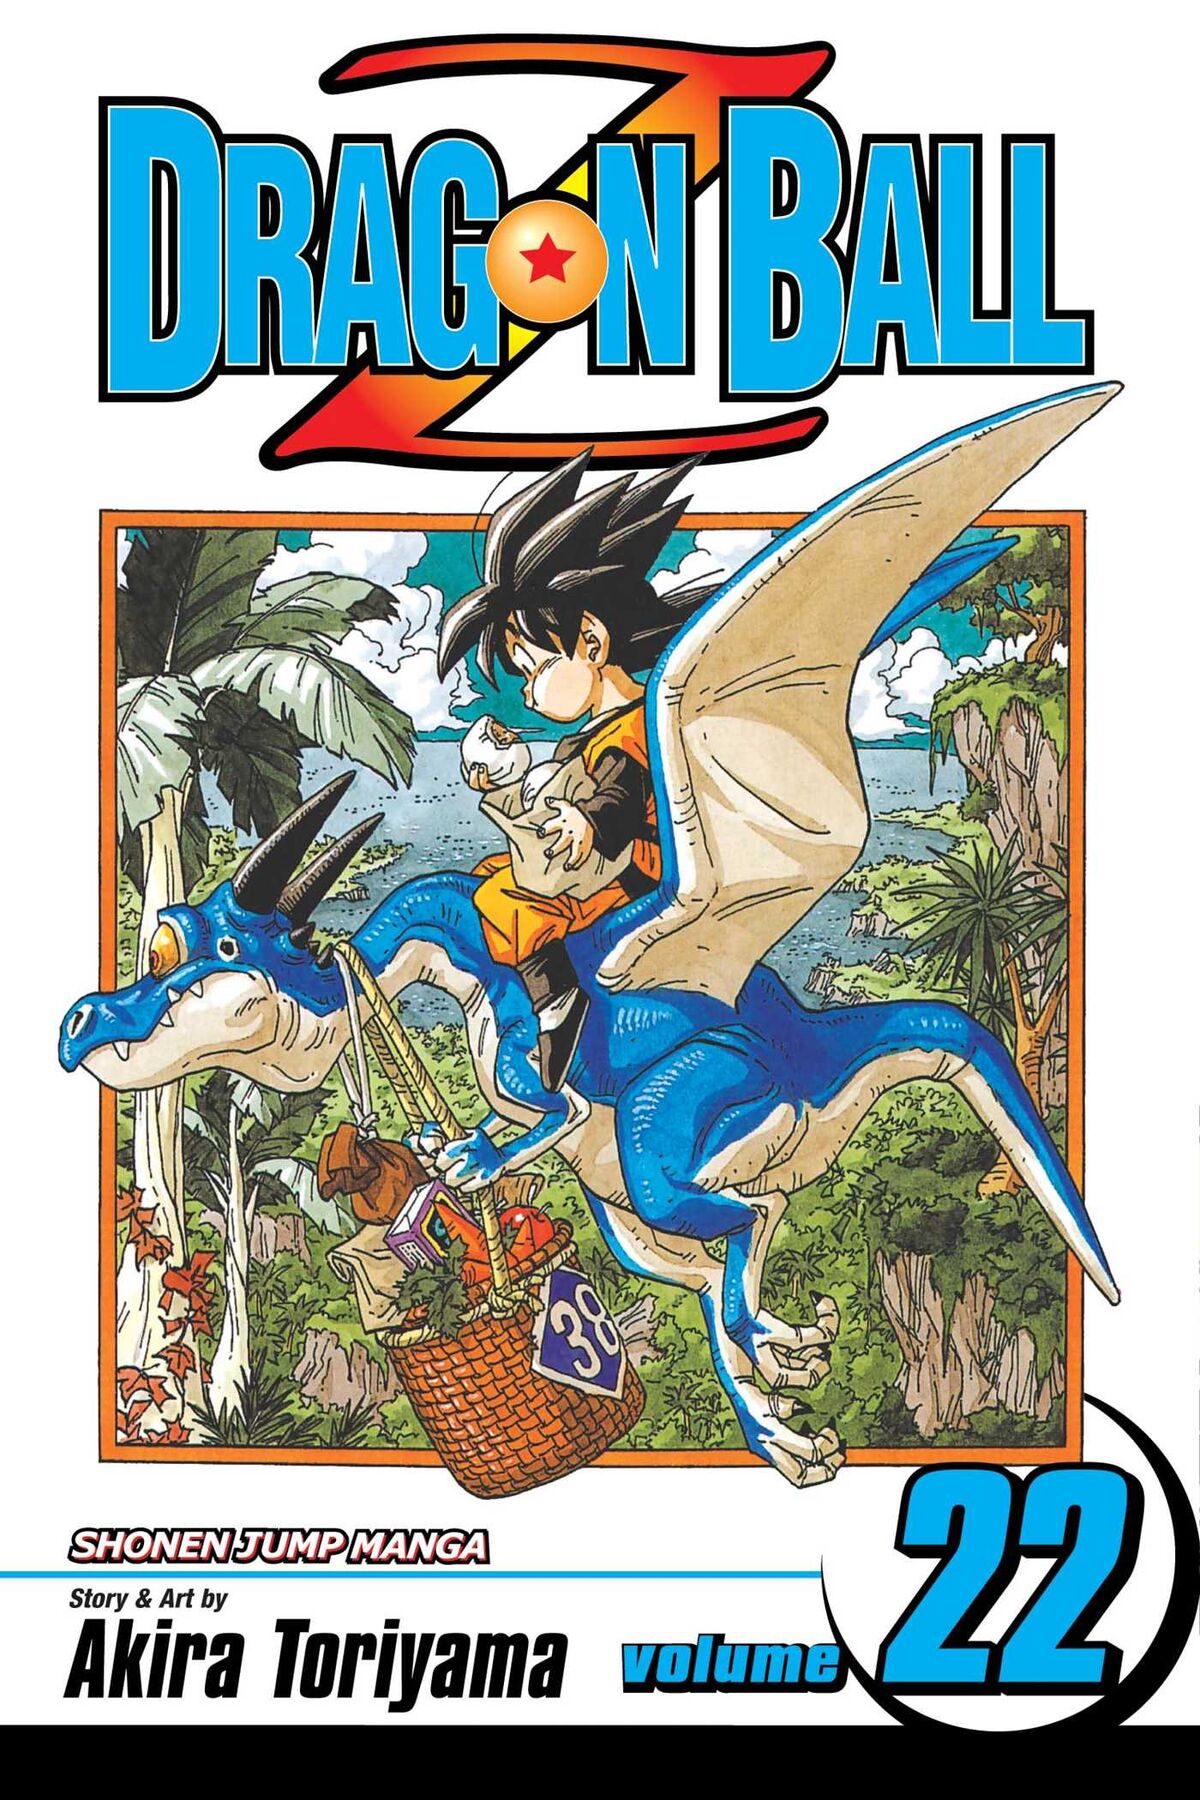 Buy Dragon Ball Super Manga 88 Red Series 299